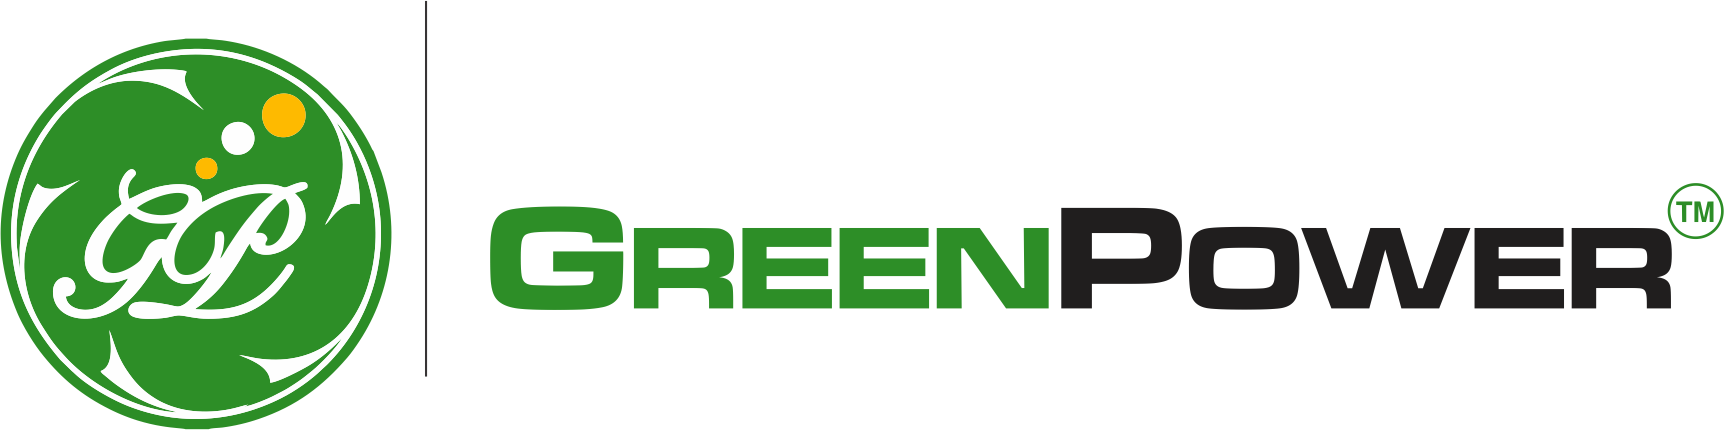 Greenpower Logo PNG